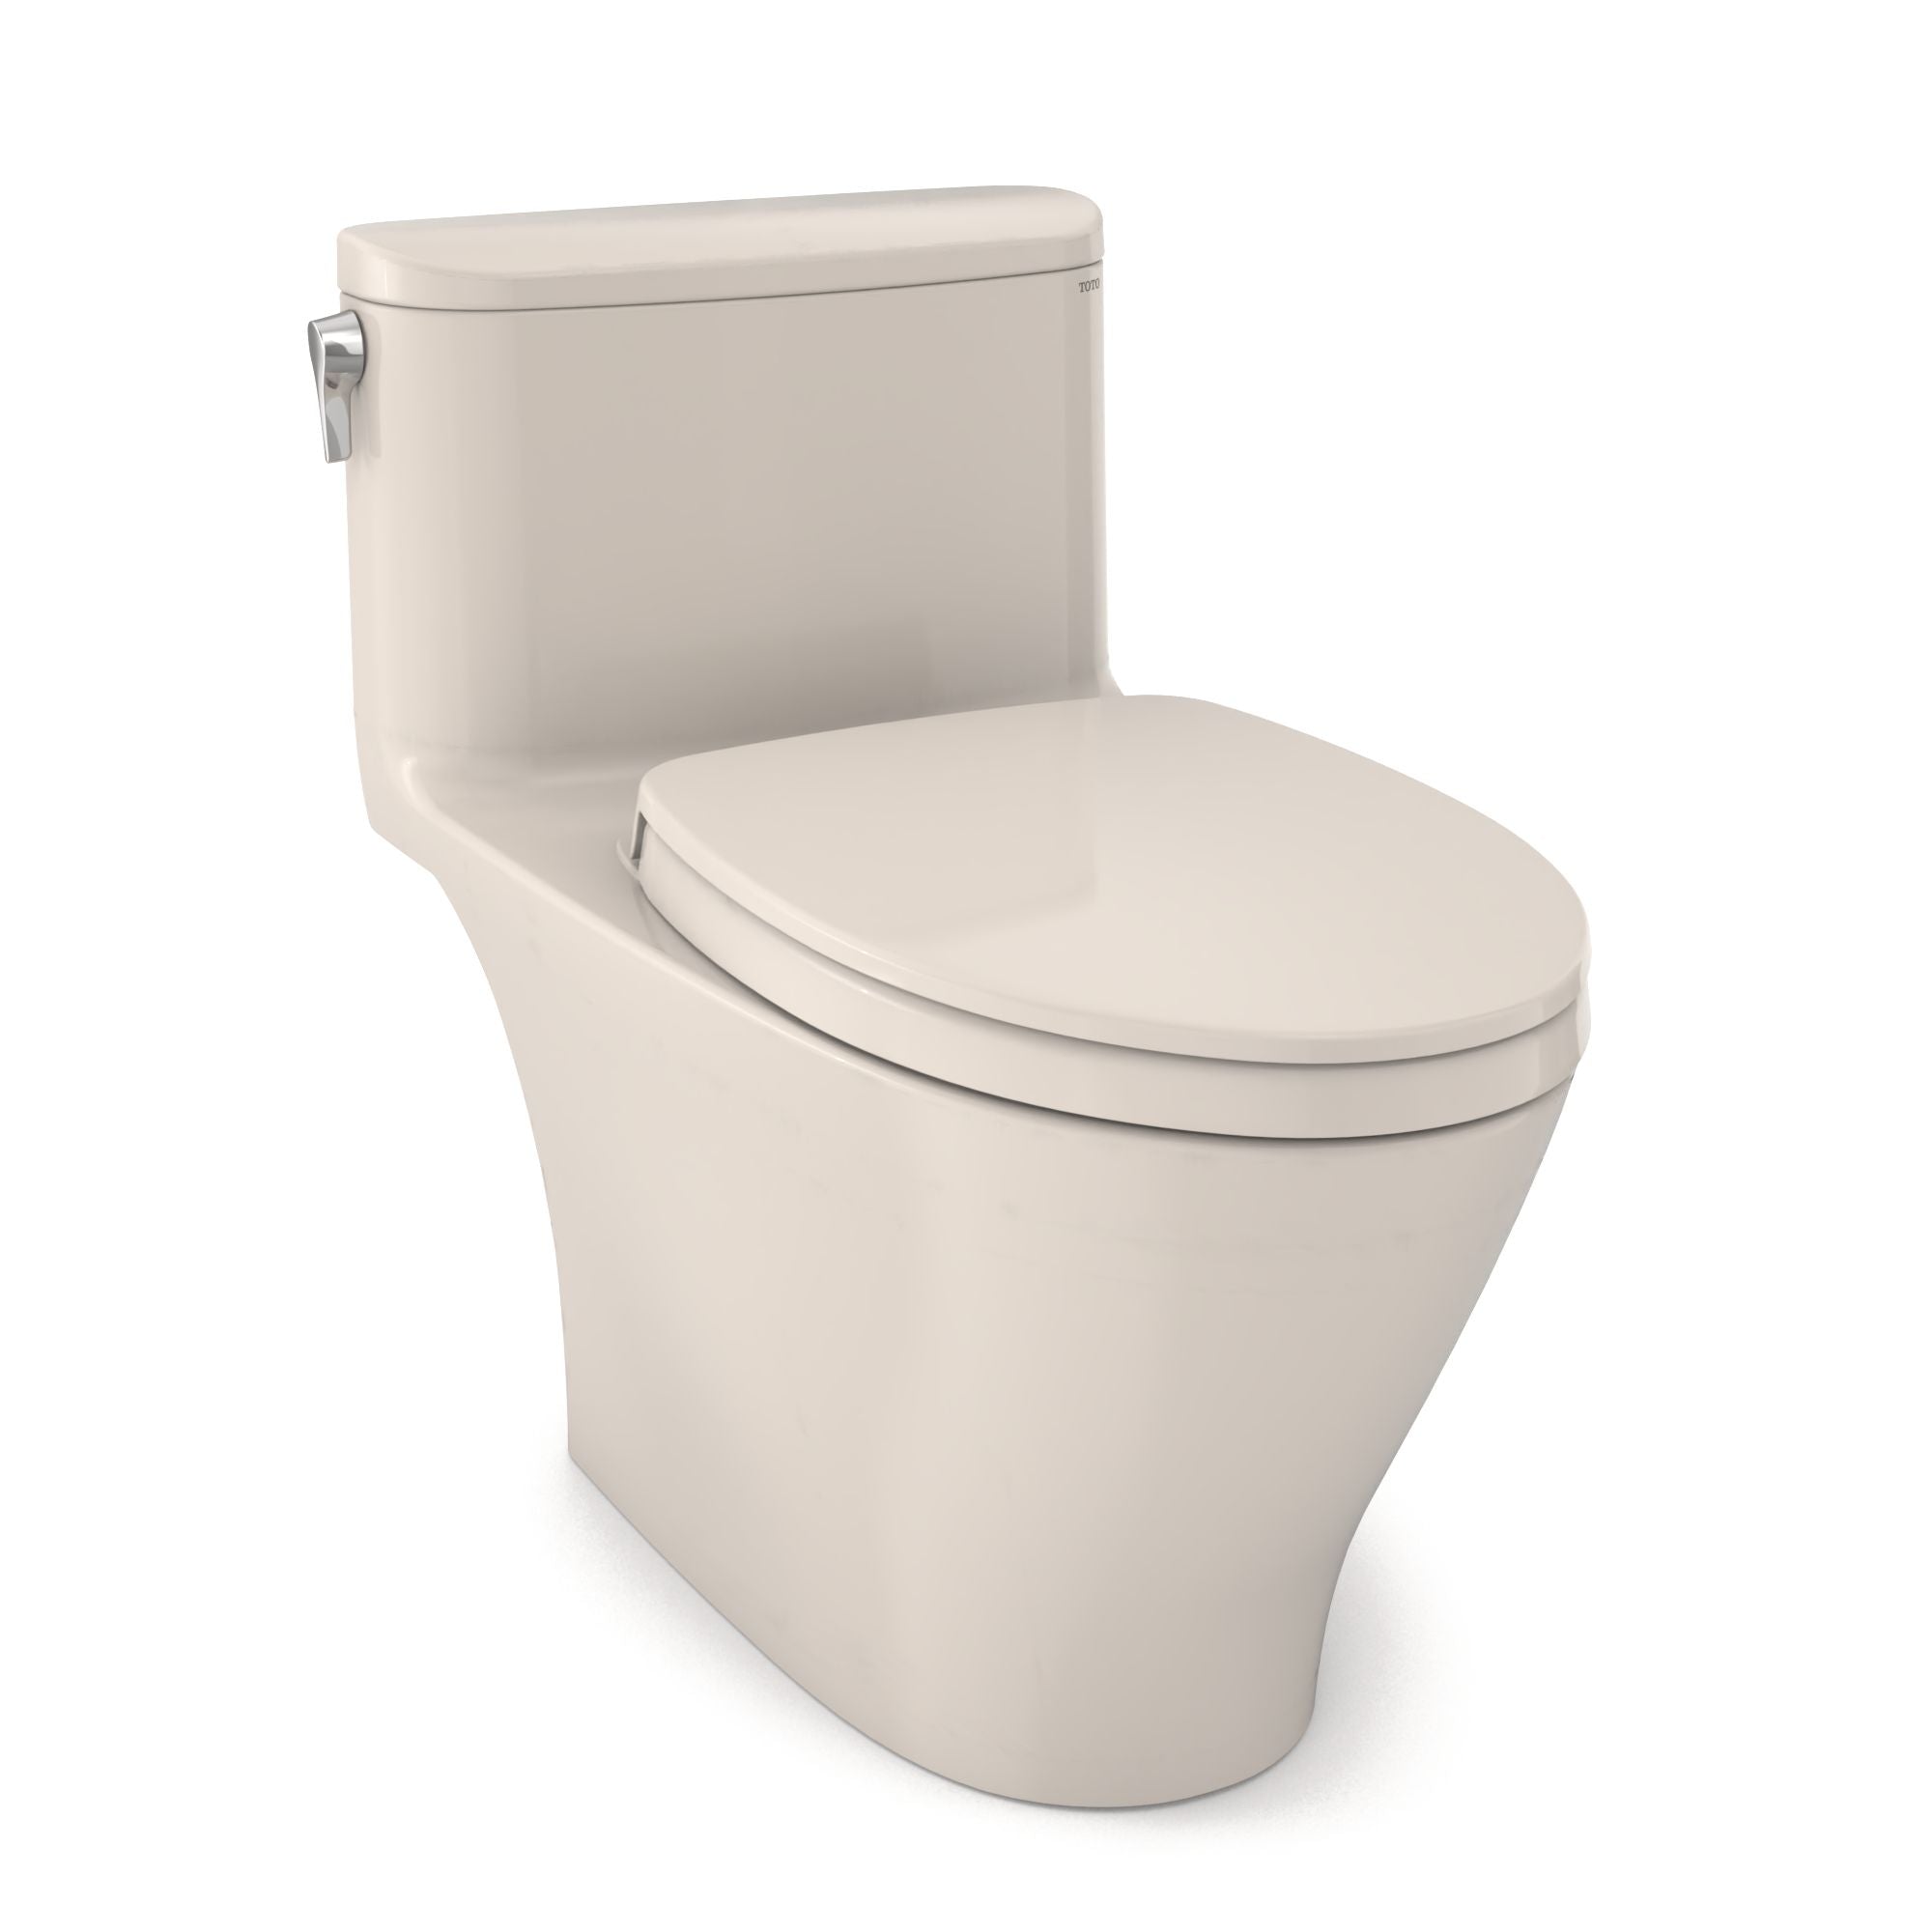 Toto Nexus One-piece Toilet 1.28 GPF Elongated Bowl